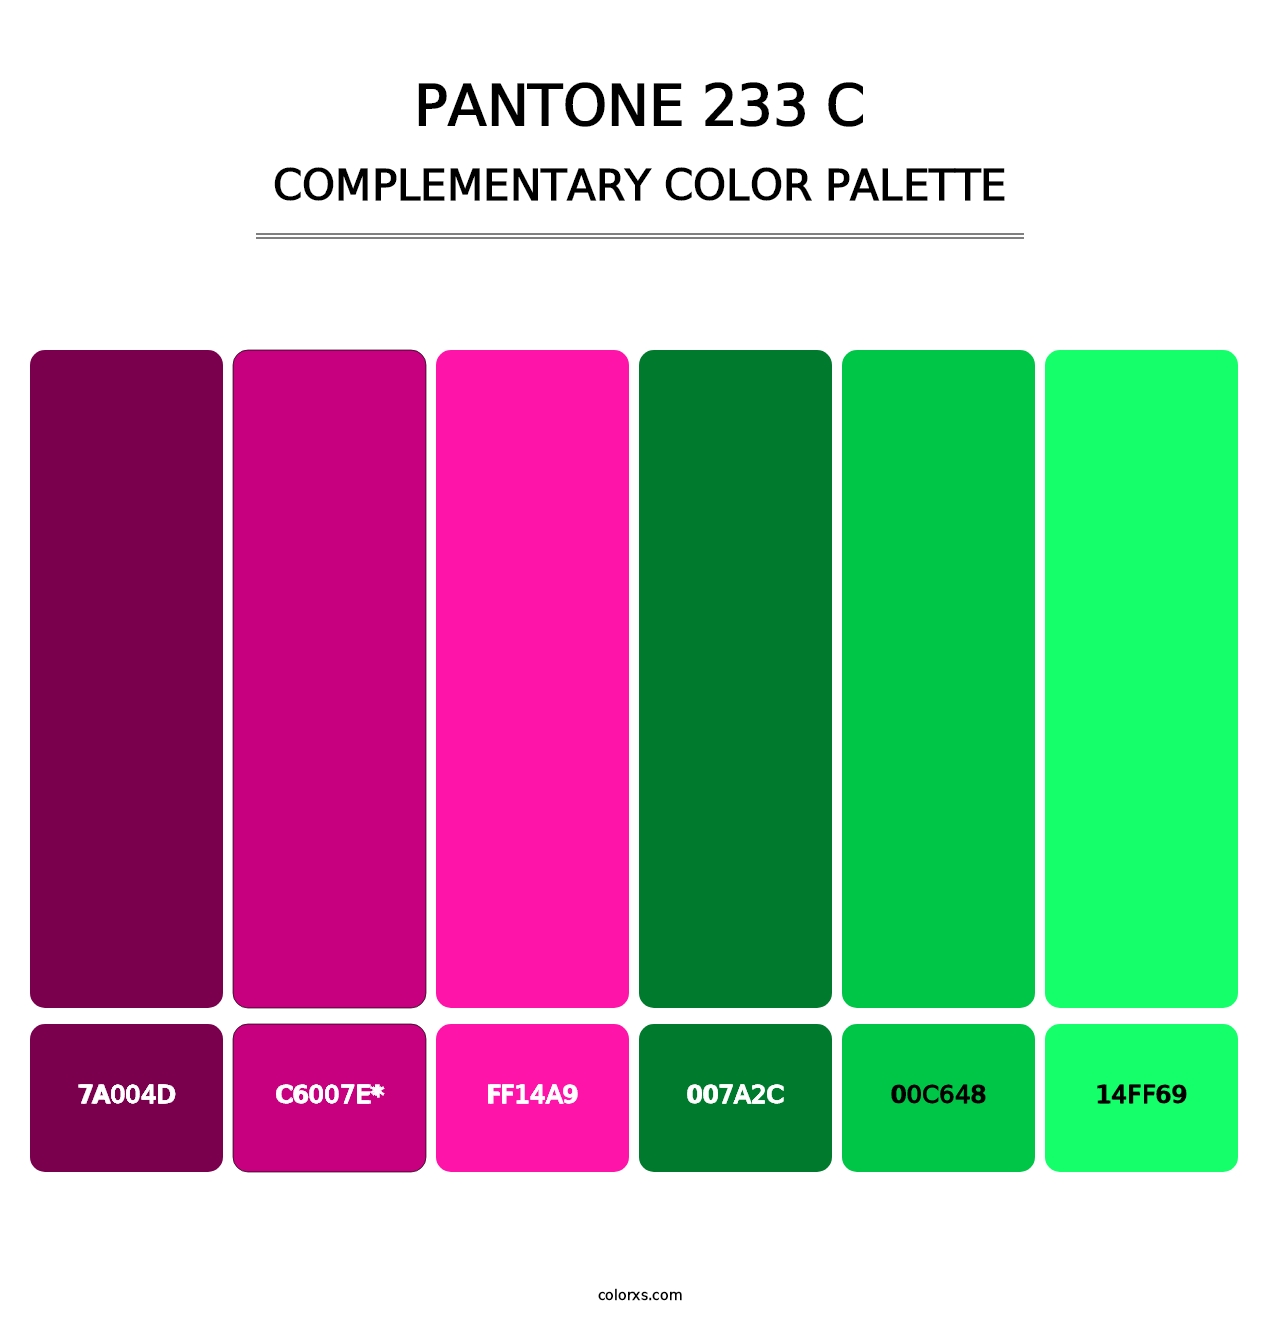 PANTONE 233 C - Complementary Color Palette